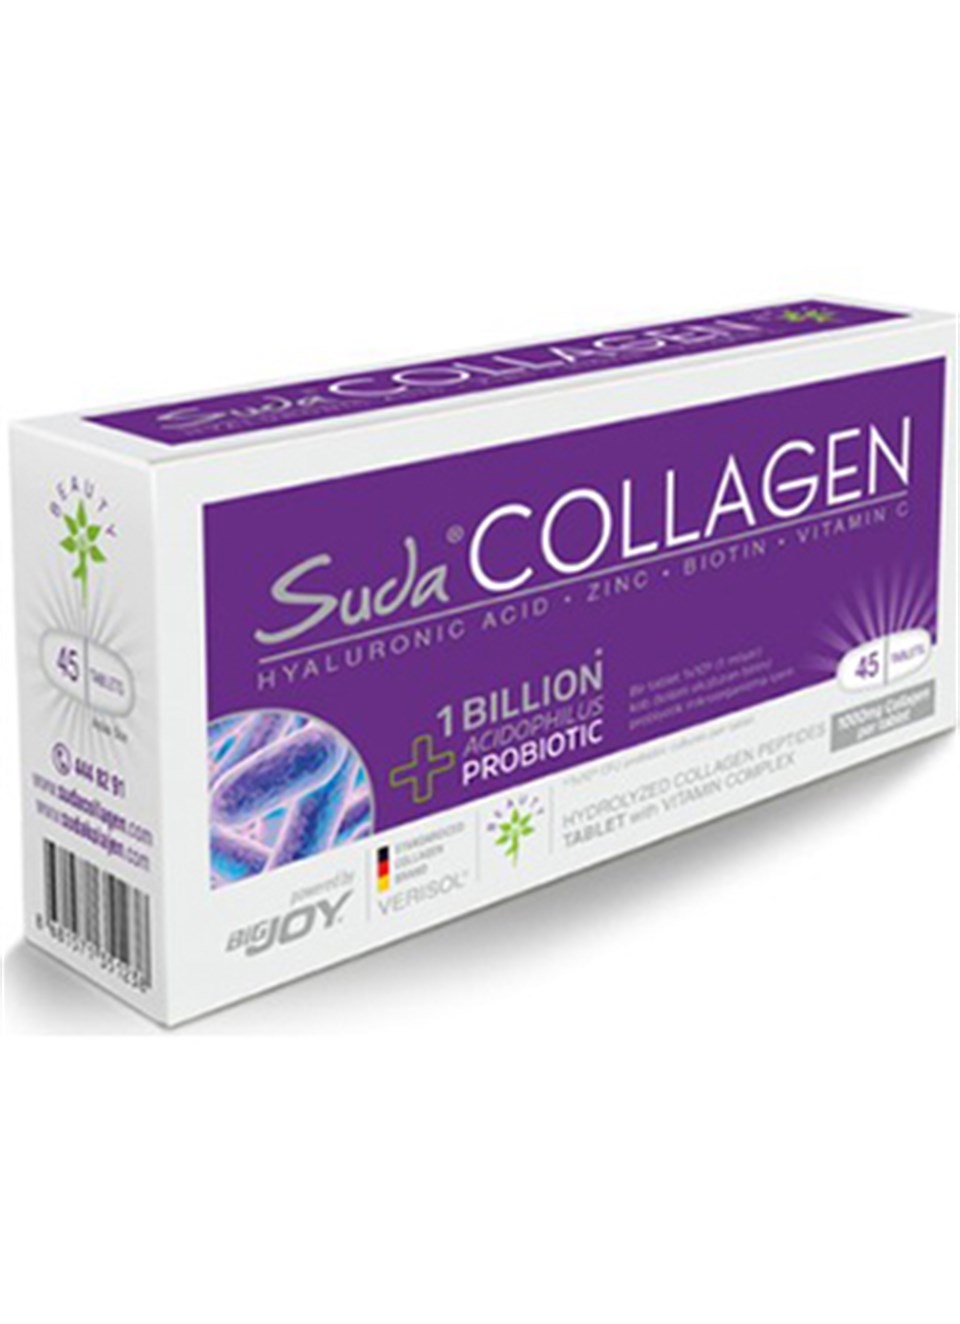 Suda Collagen 45 Tablet - 1